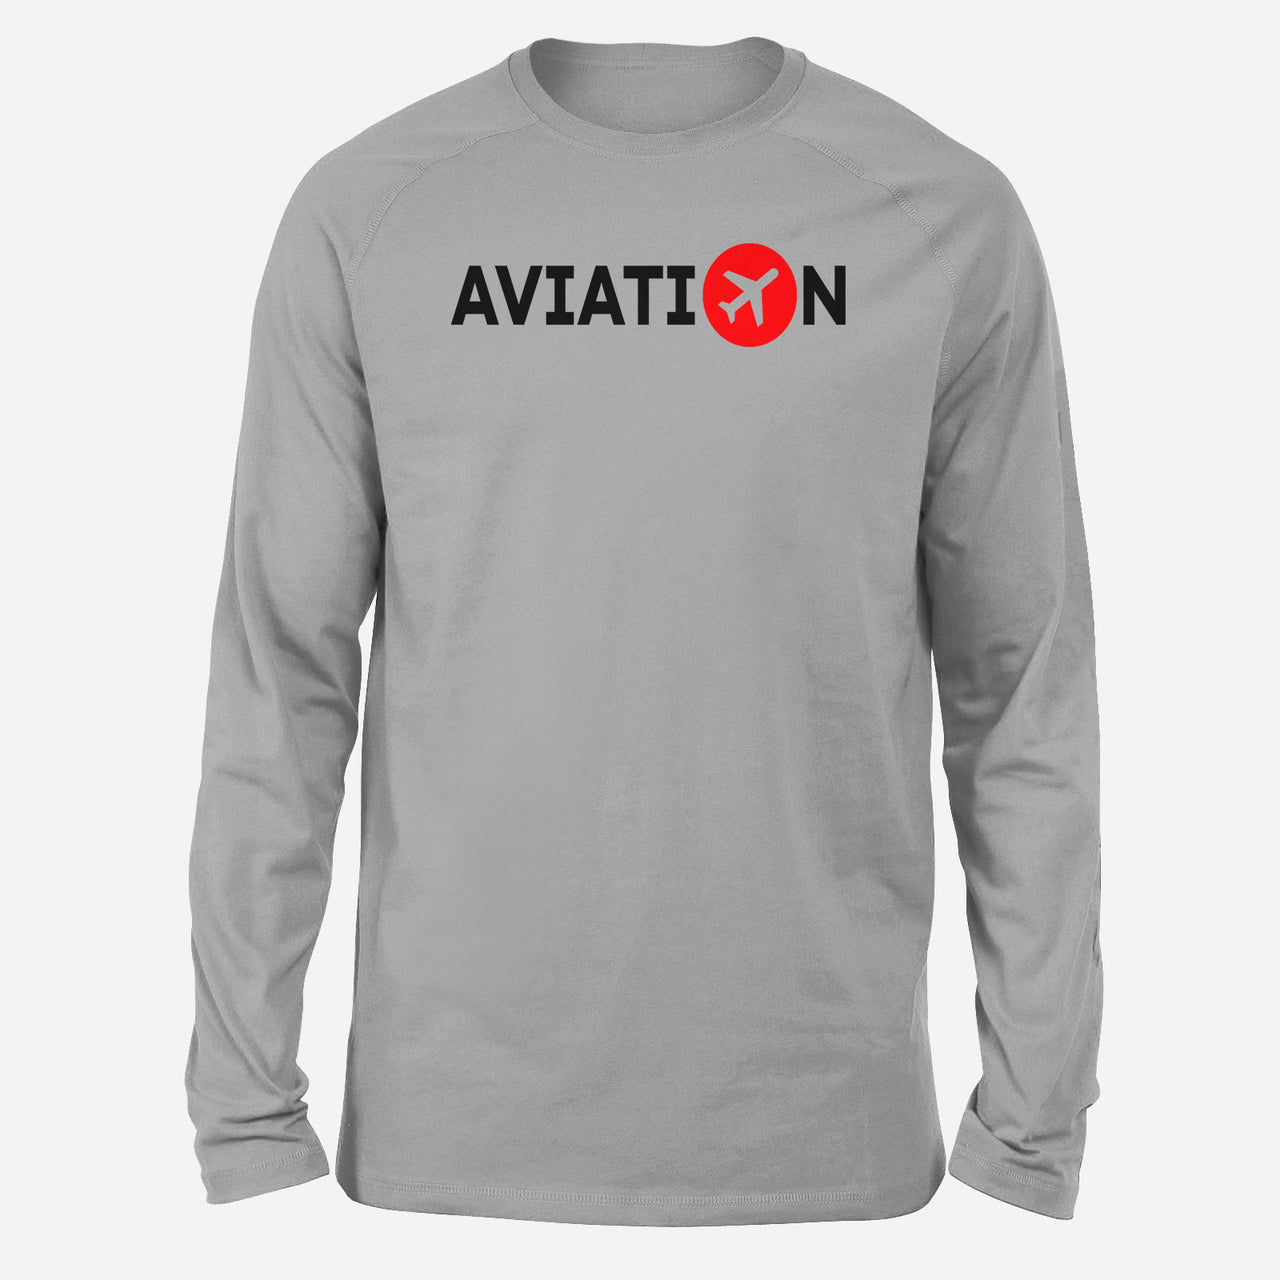 Aviation Designed Long-Sleeve T-Shirts